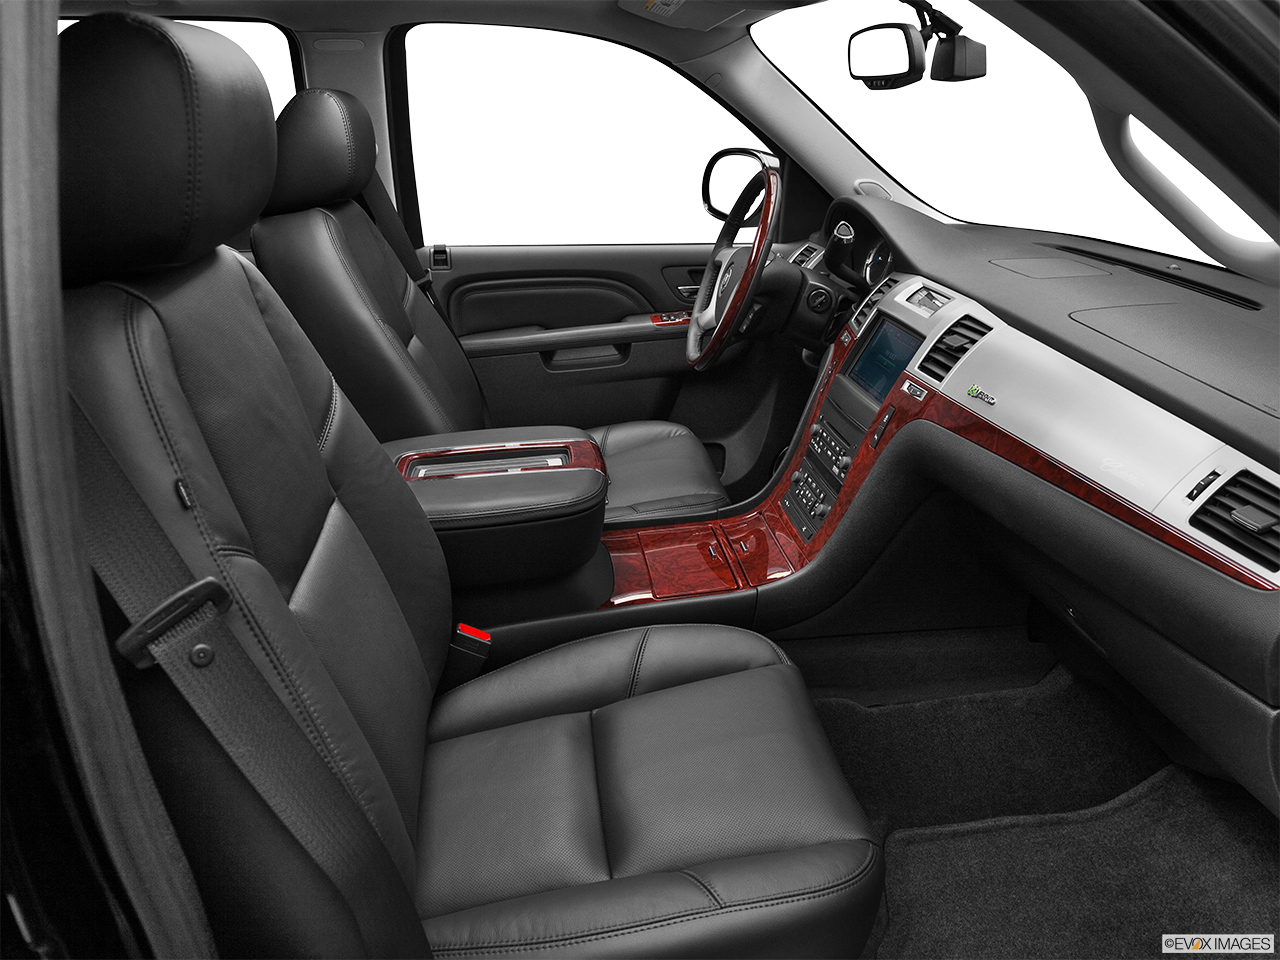 2012 Cadillac Escalade Hybrid Base Passenger seat. 